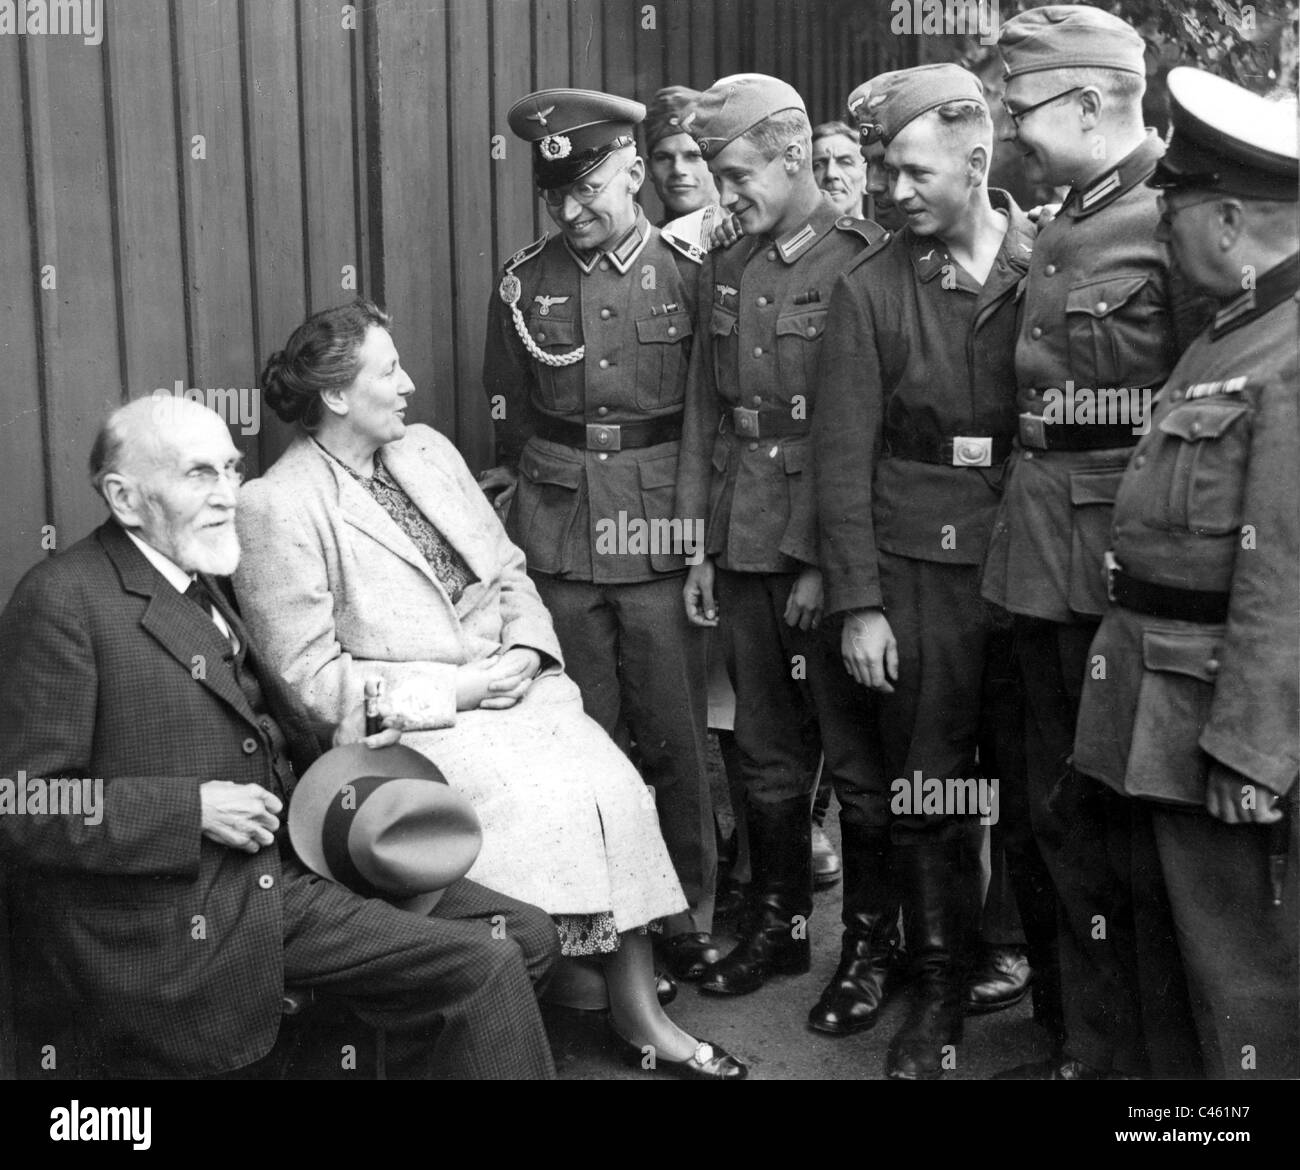 Winifred Wagner, Karl Runkwitz avec les membres de la Wehrmacht, 1940 Banque D'Images